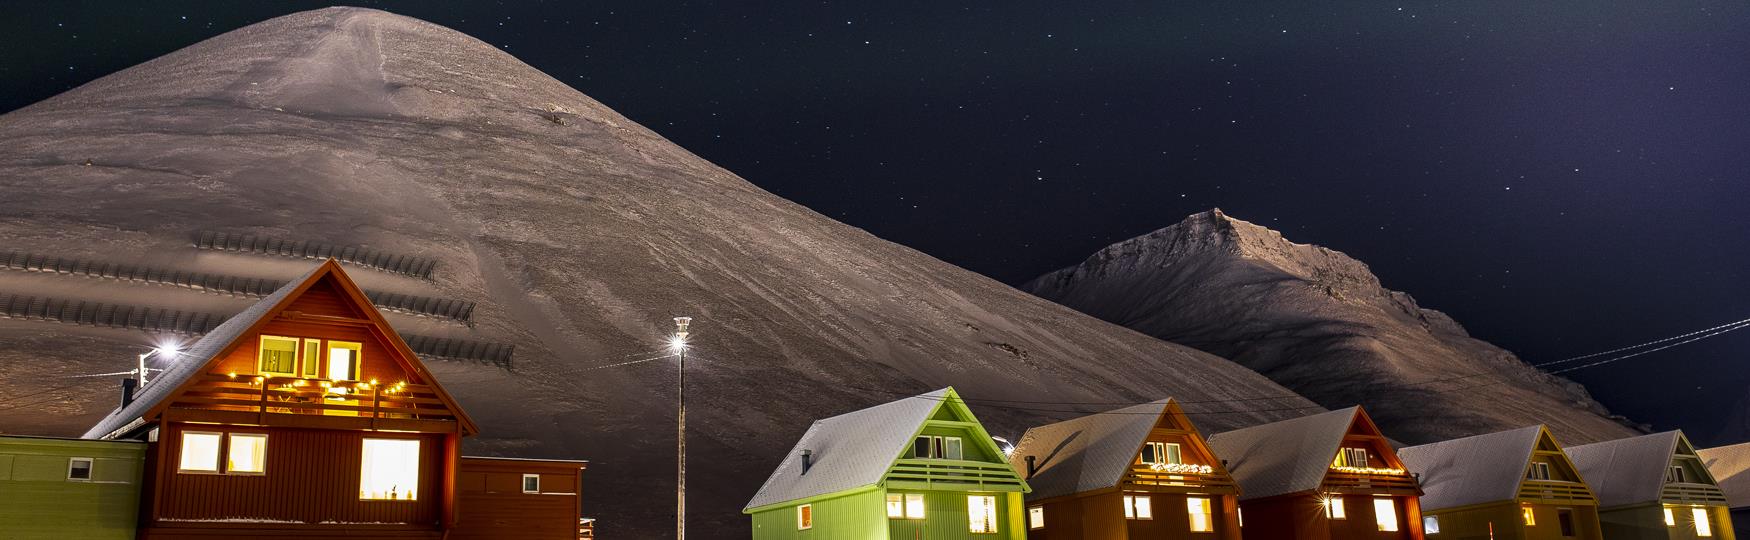 Longyearbyen in the Polar Night